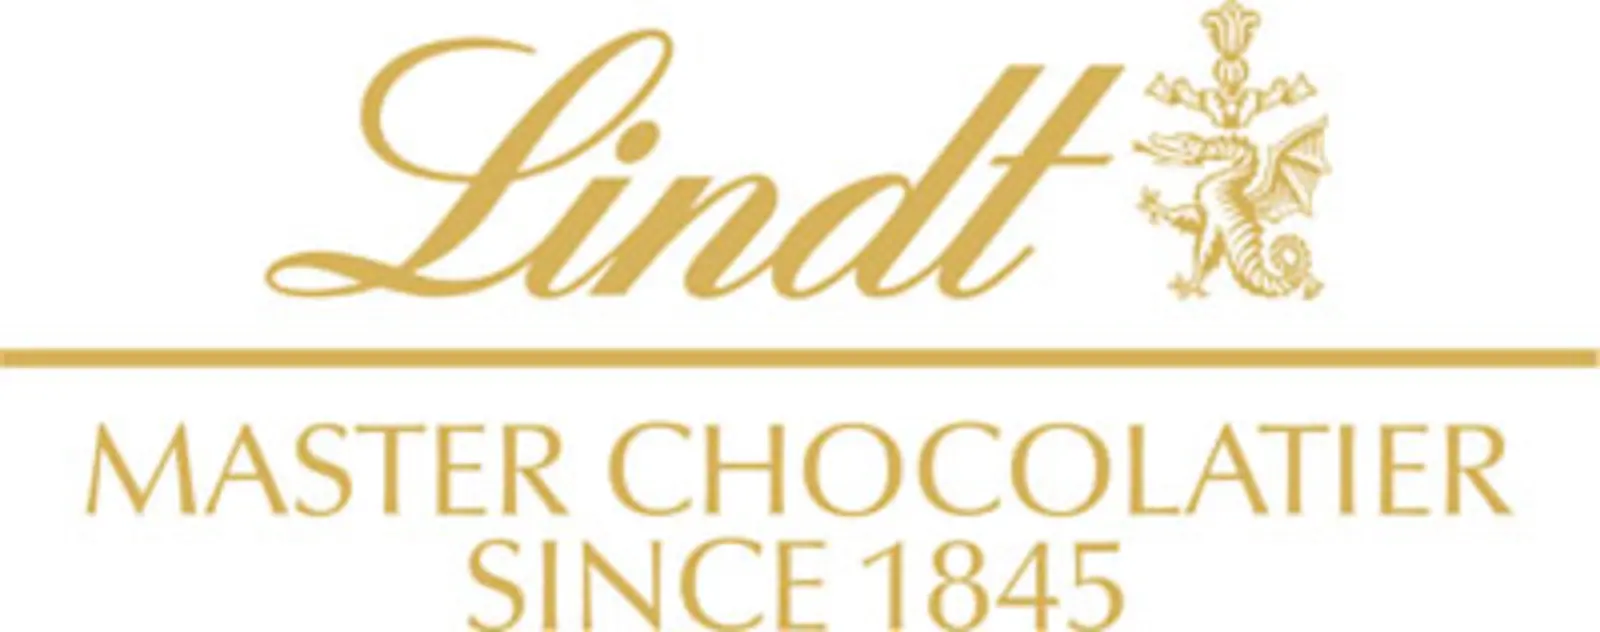 Logo Lindt & Sprüngli